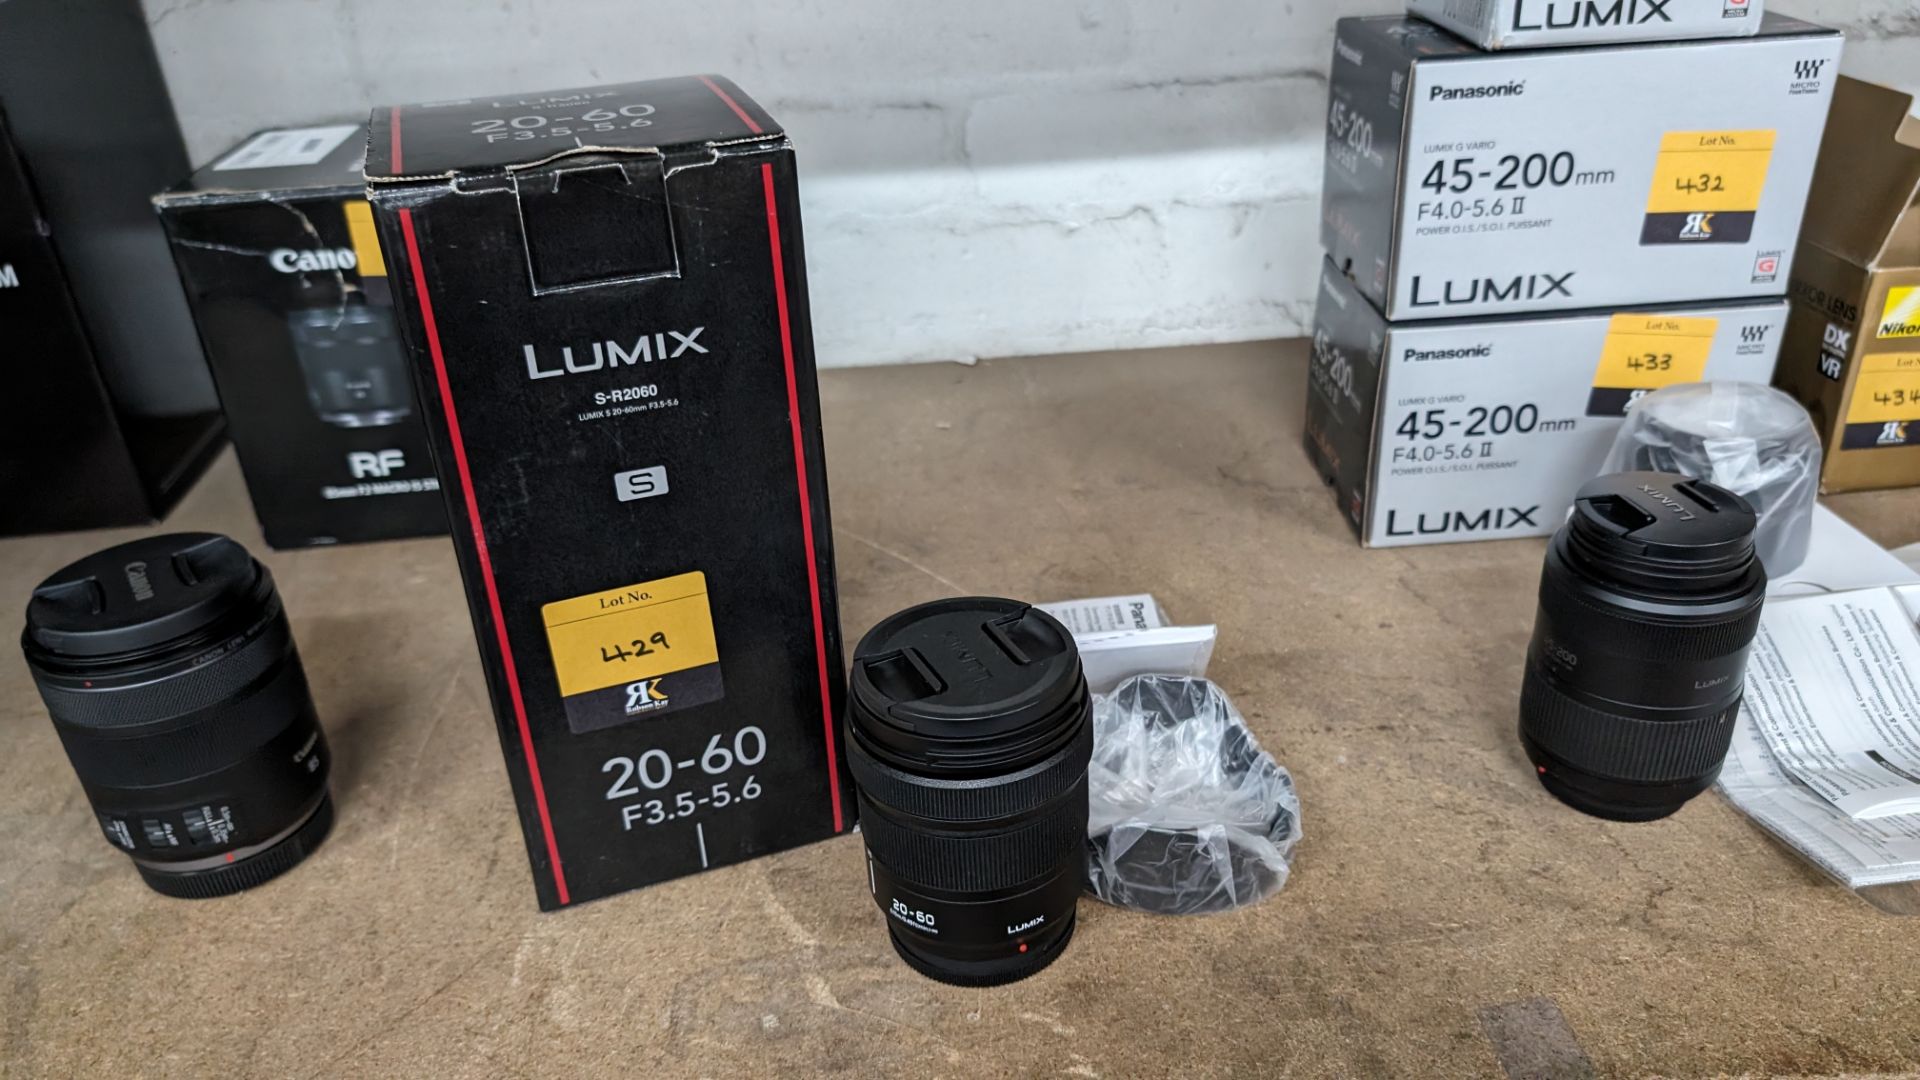 Panasonic Lumix model S-R2060 lens, 20-60mm, f3.5-5.6 - Bild 3 aus 14